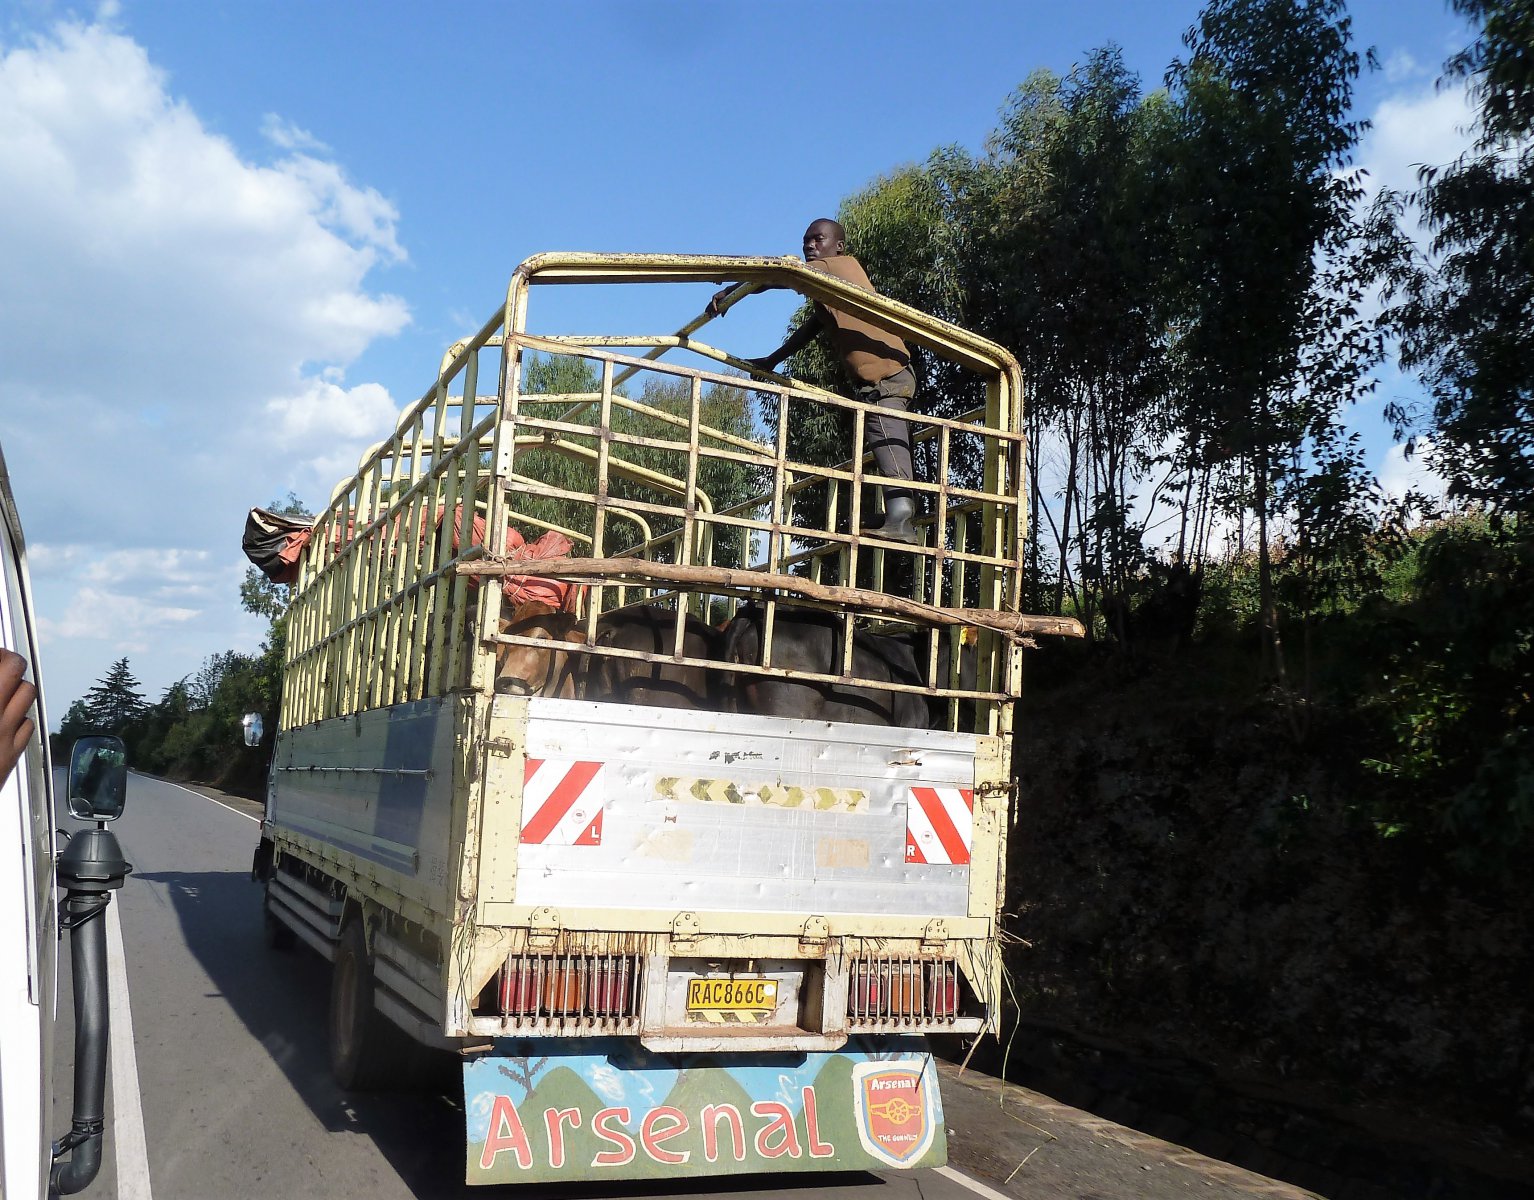 Transport in Rwanda